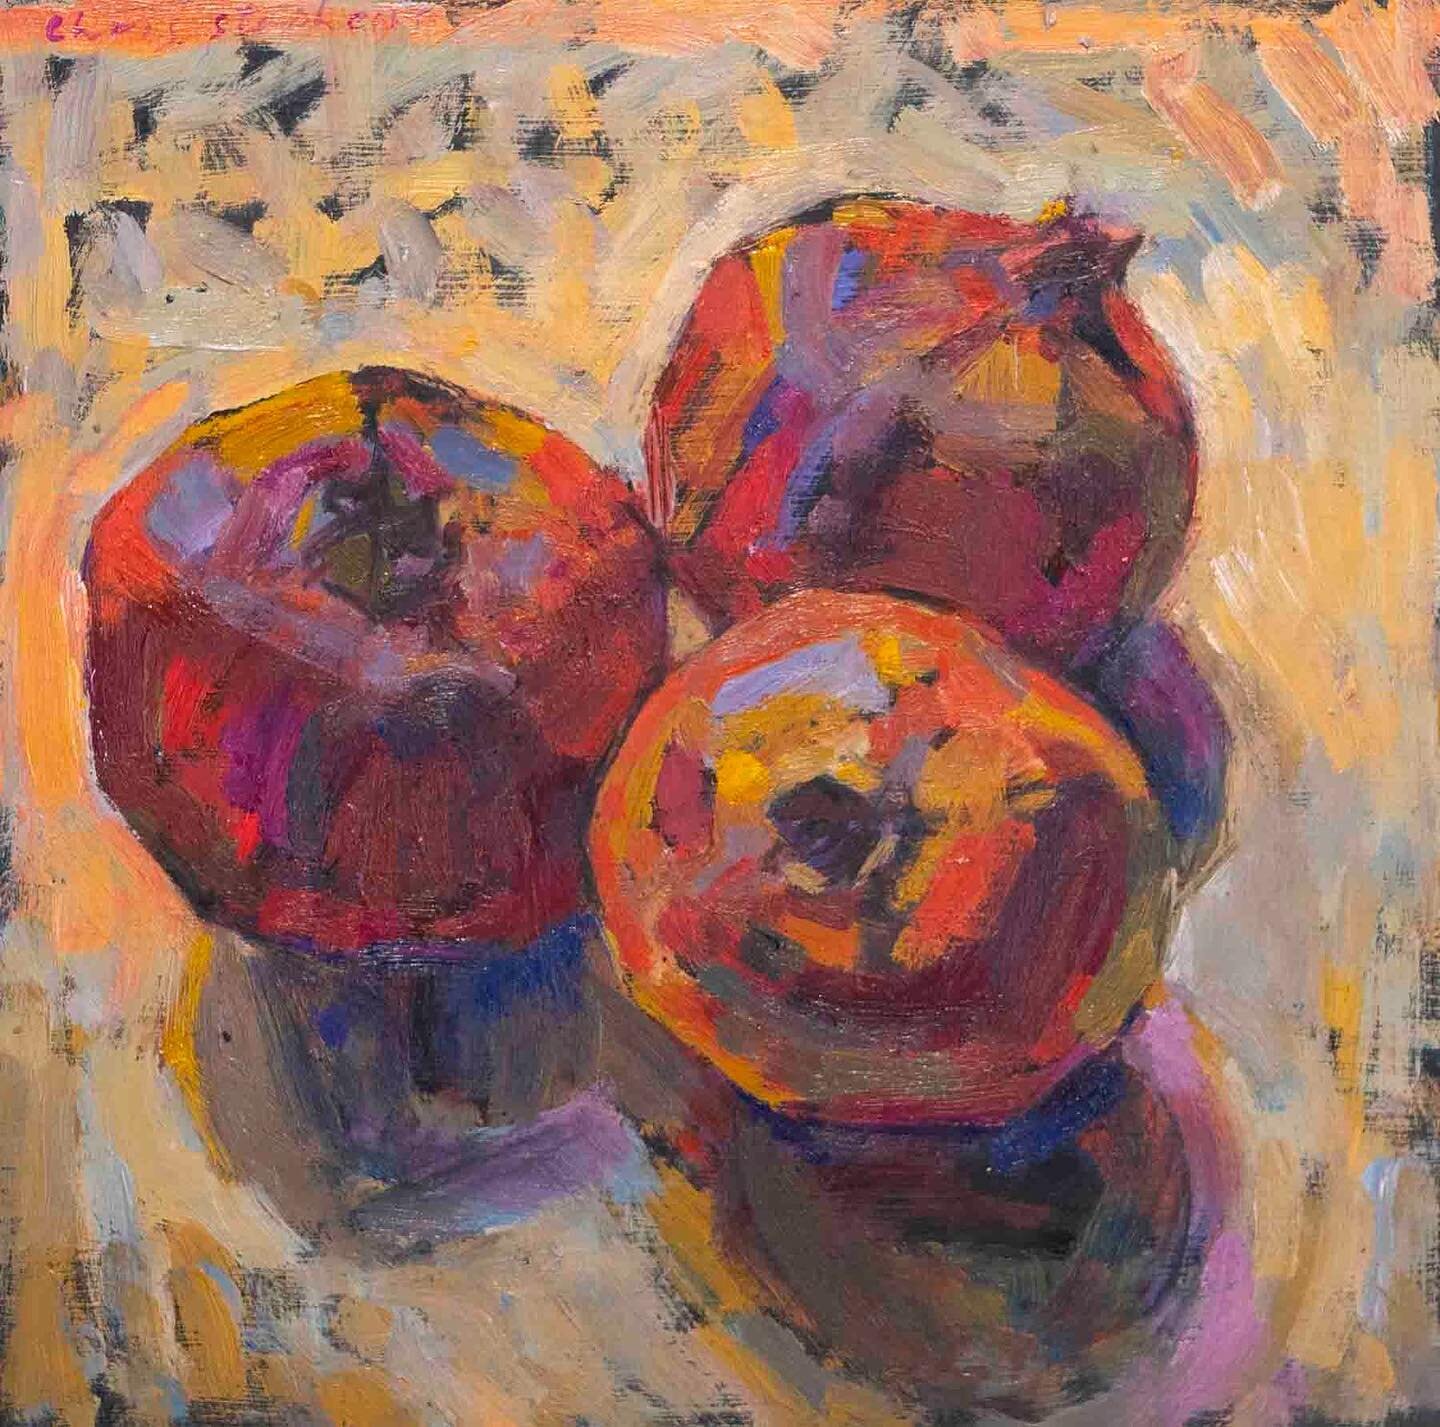 &ldquo;Pomegranates,&rdquo; Chris Stephens 
Oil on Panel, 8&rdquo;x8&rdquo;

SOLD

@haleyfineart 
@chrisstephensart 

#fineart #stilllife #pomegranate #oilpainting #painting